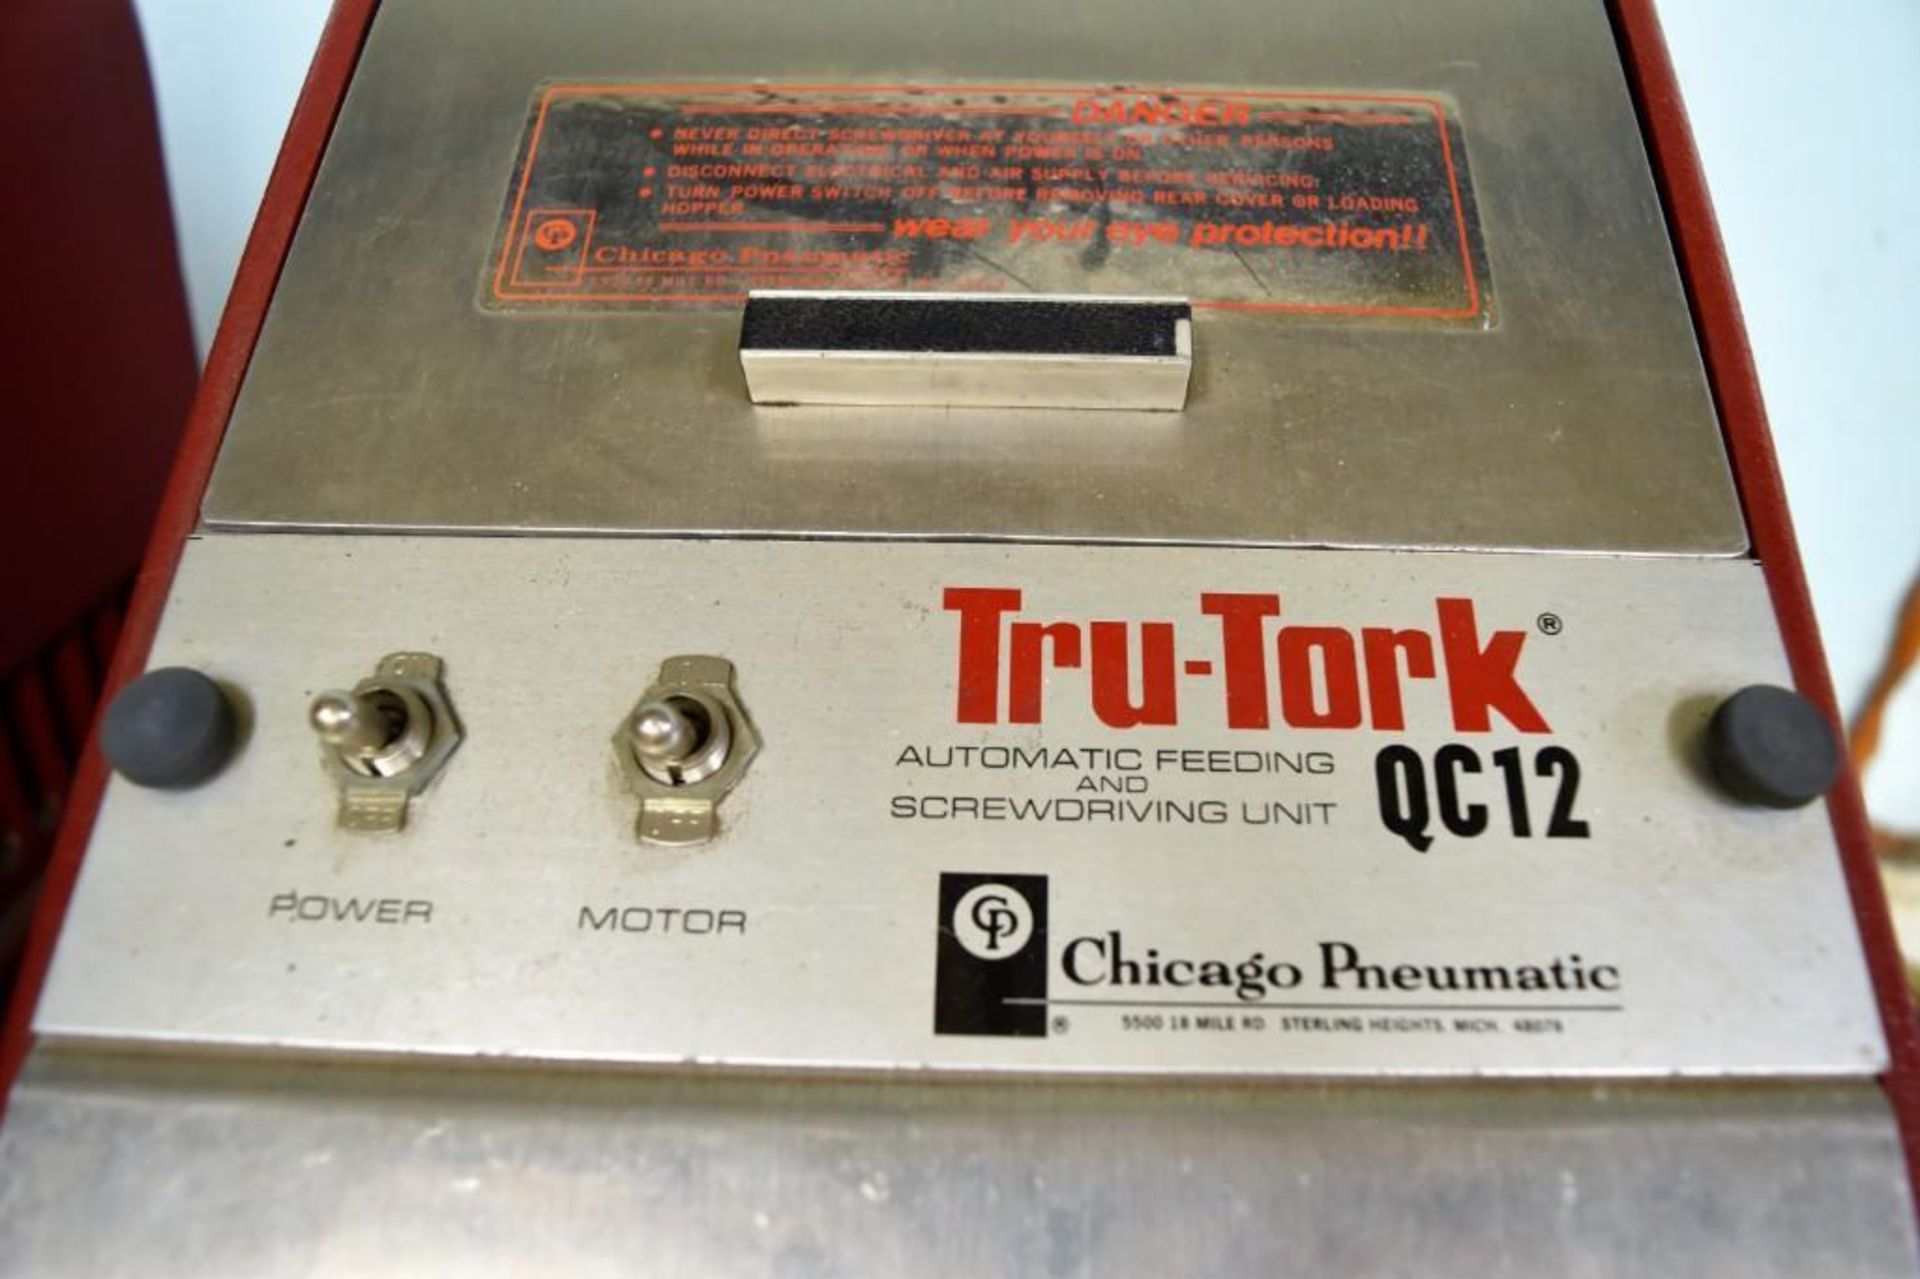 Chicago Pneumatic Model Tru-Tork QC12 Automatic Feeding & Screwdriving Machine - Image 3 of 4